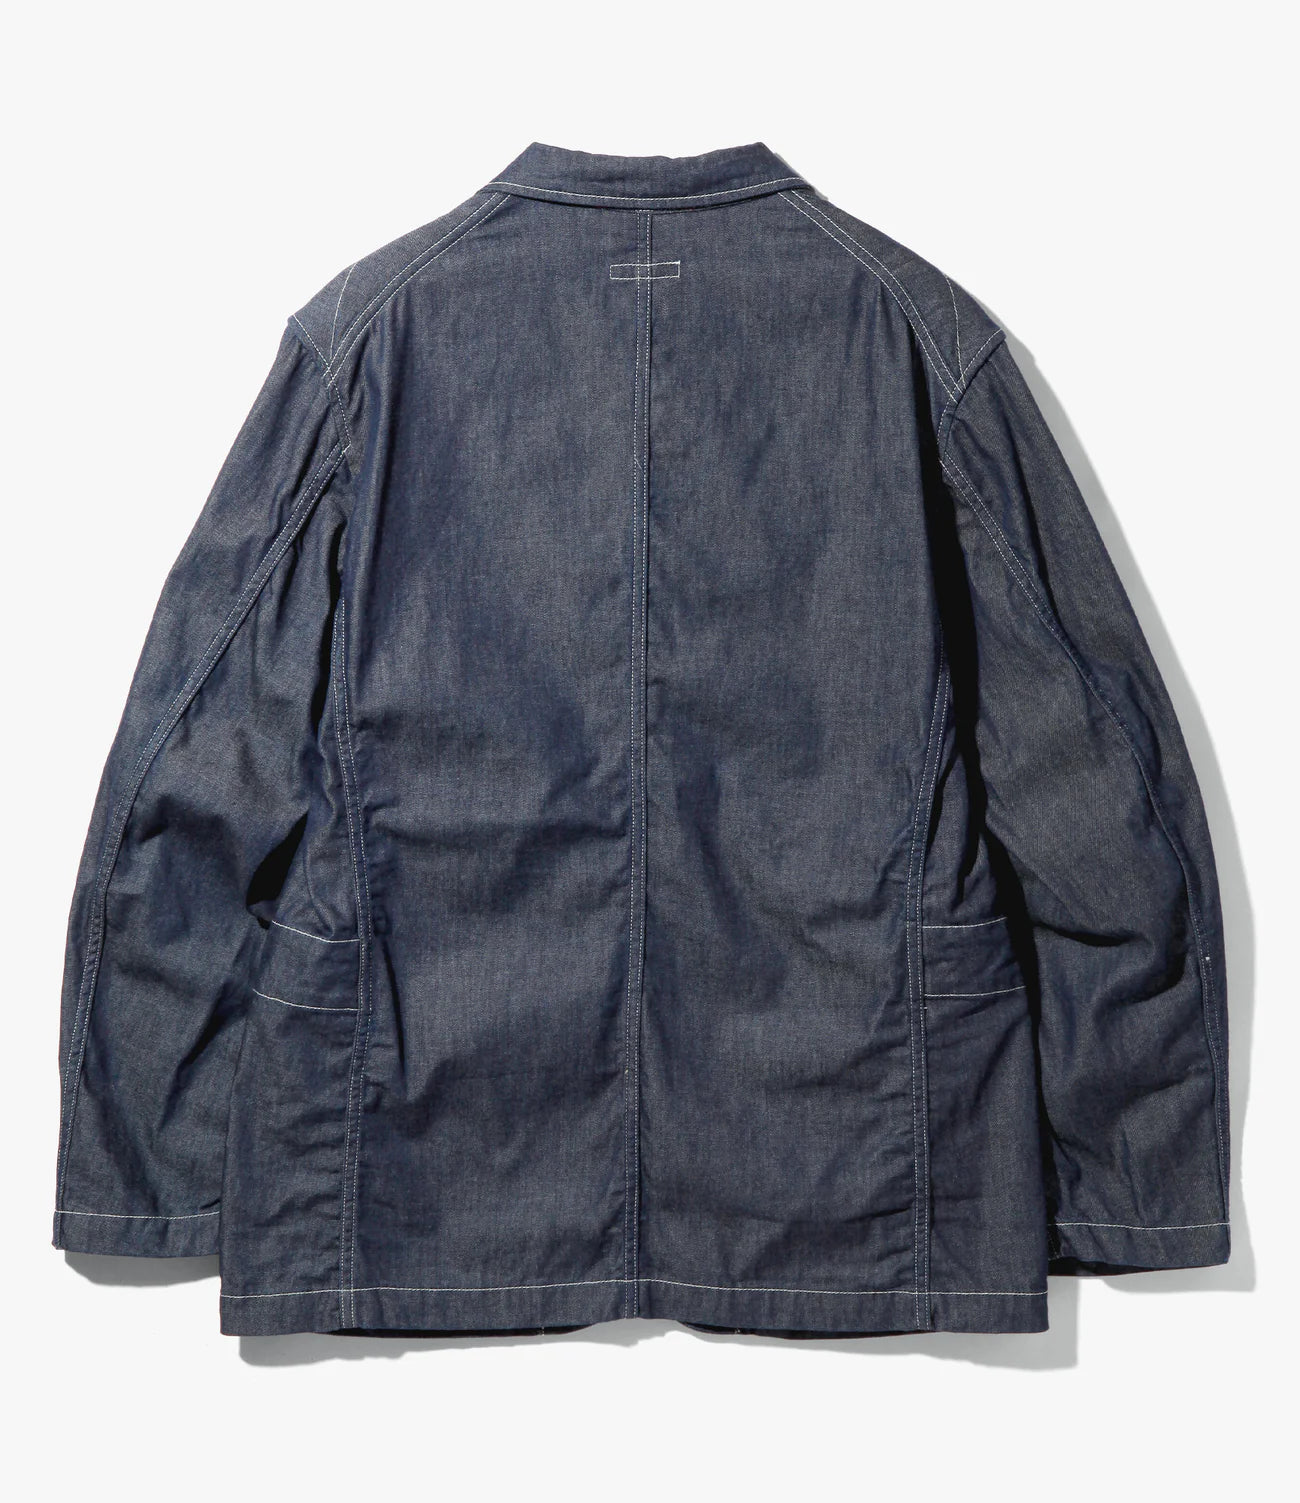 Engineered Garments Bedford Jacket - Indigo 8oz Cone Denim